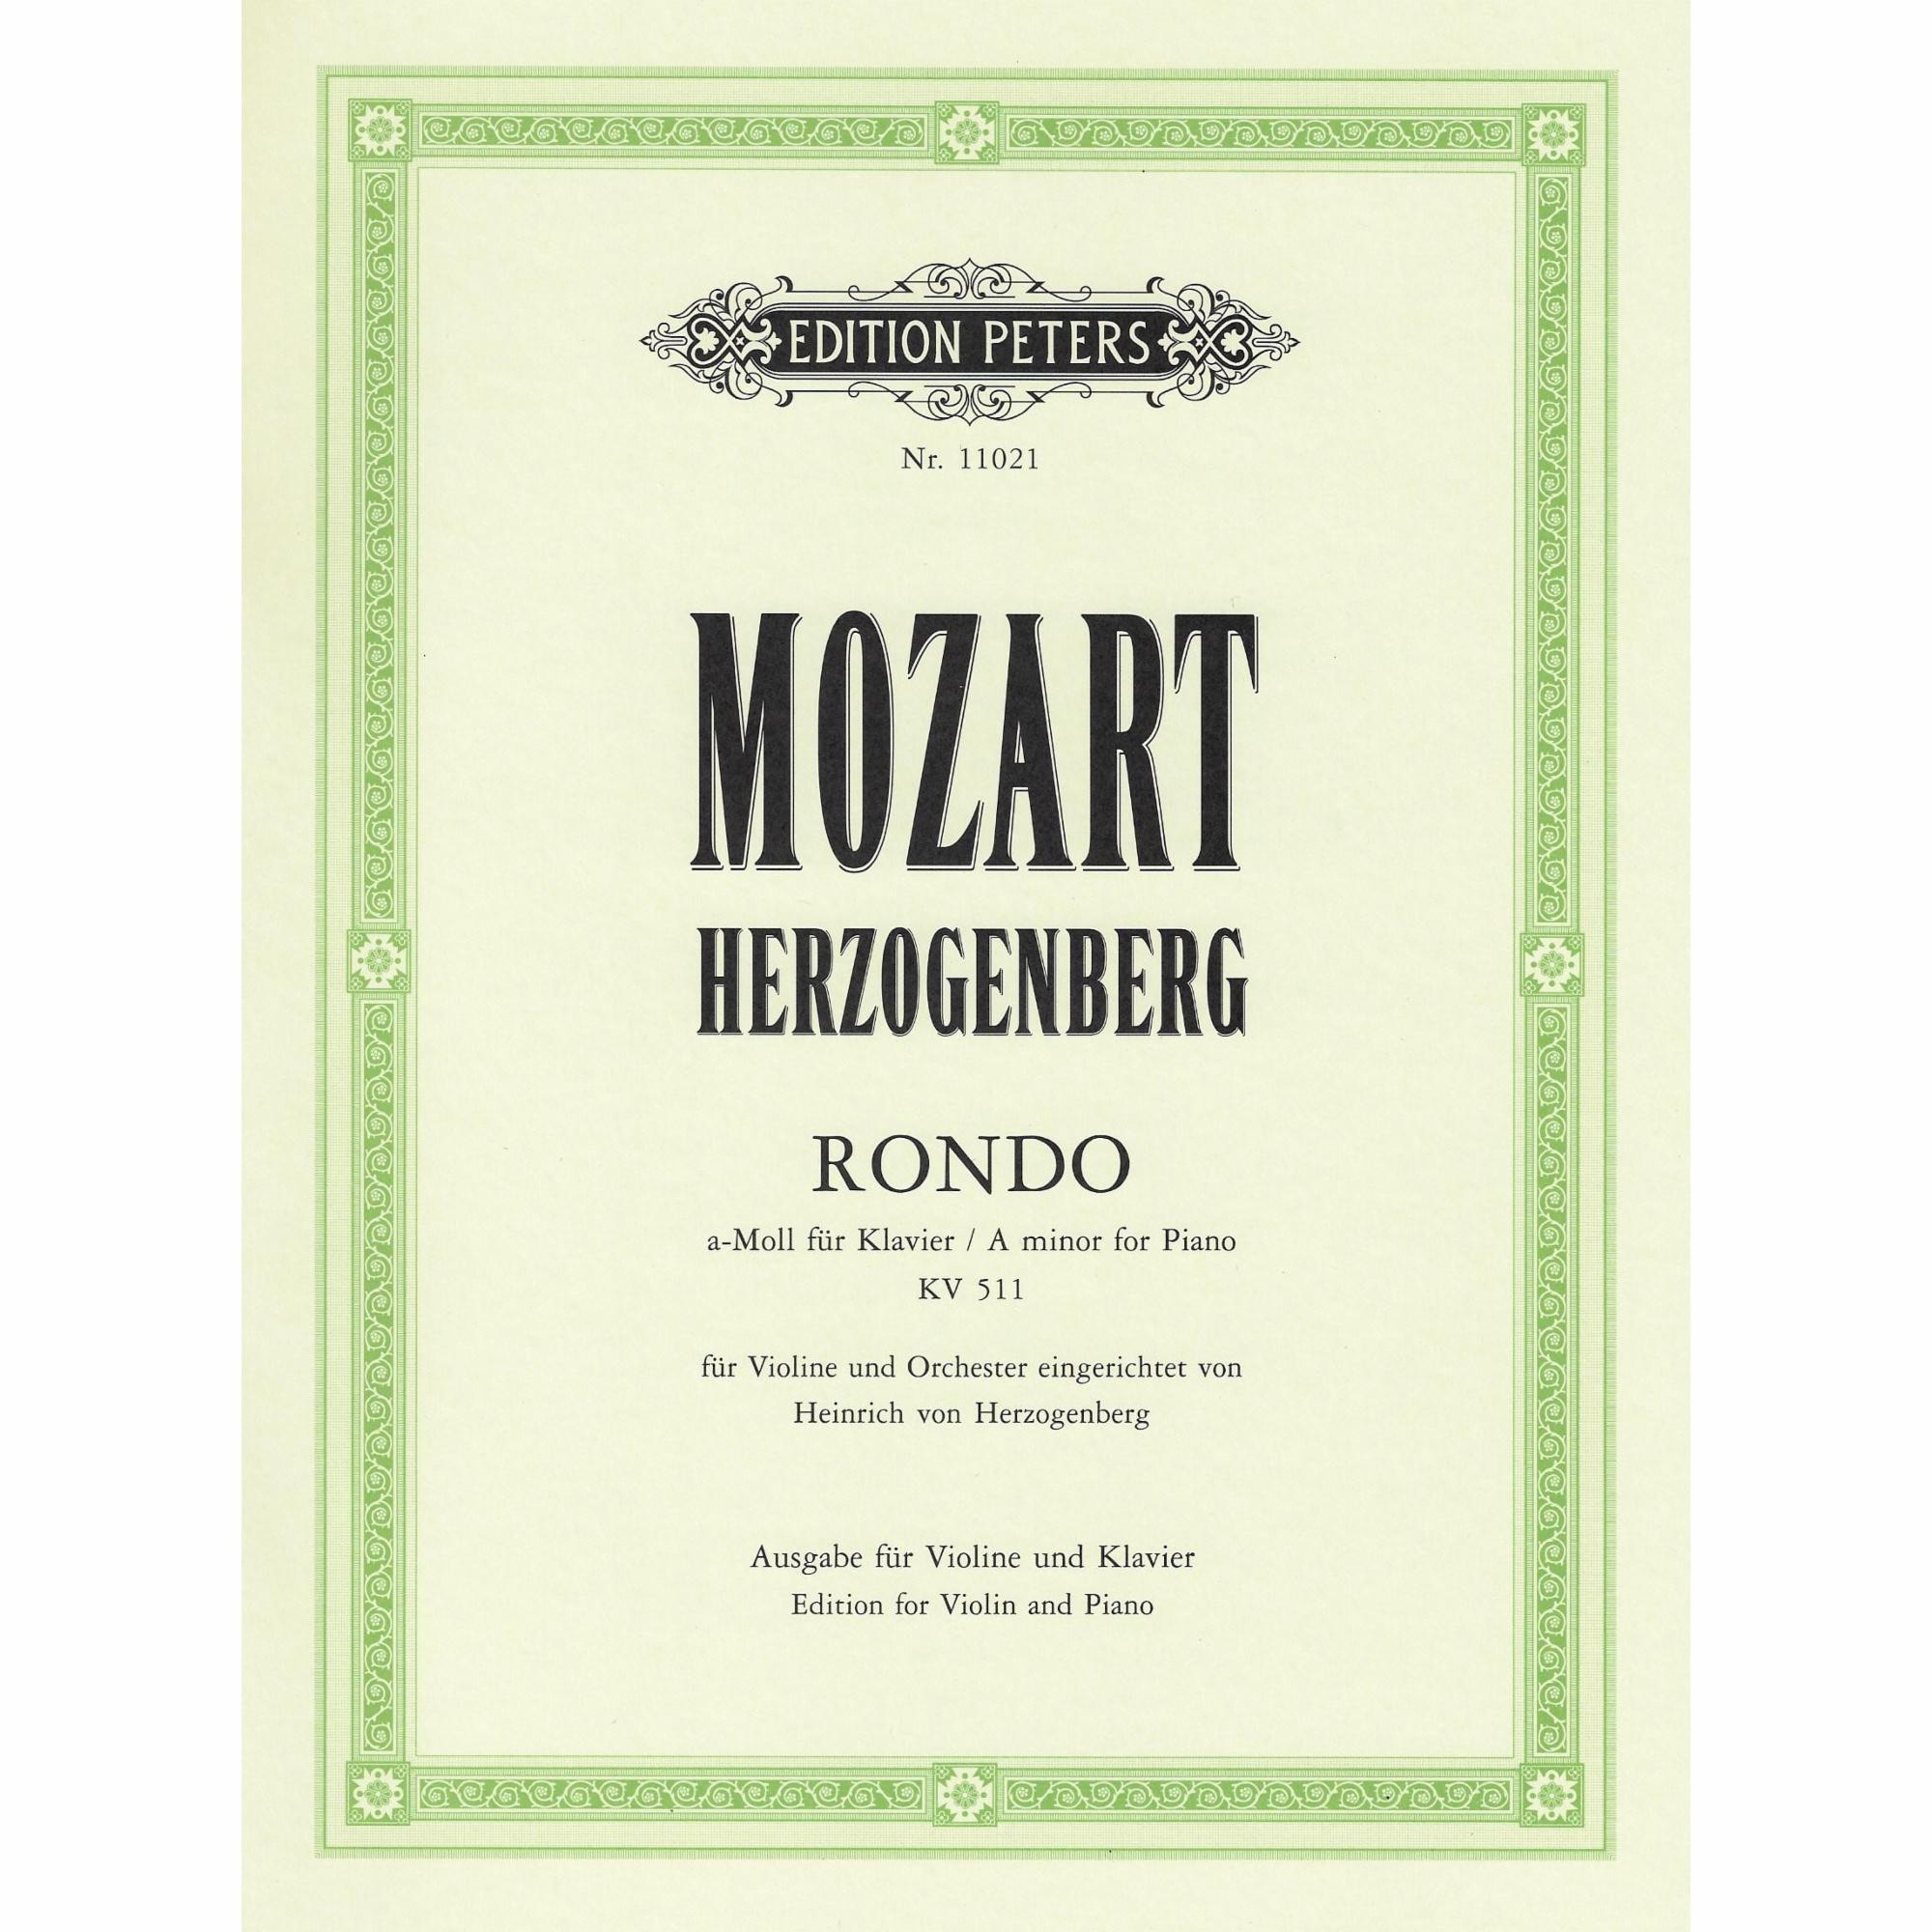 Mozart -- Rondo in A Minor, K. 511 for Violin and Piano